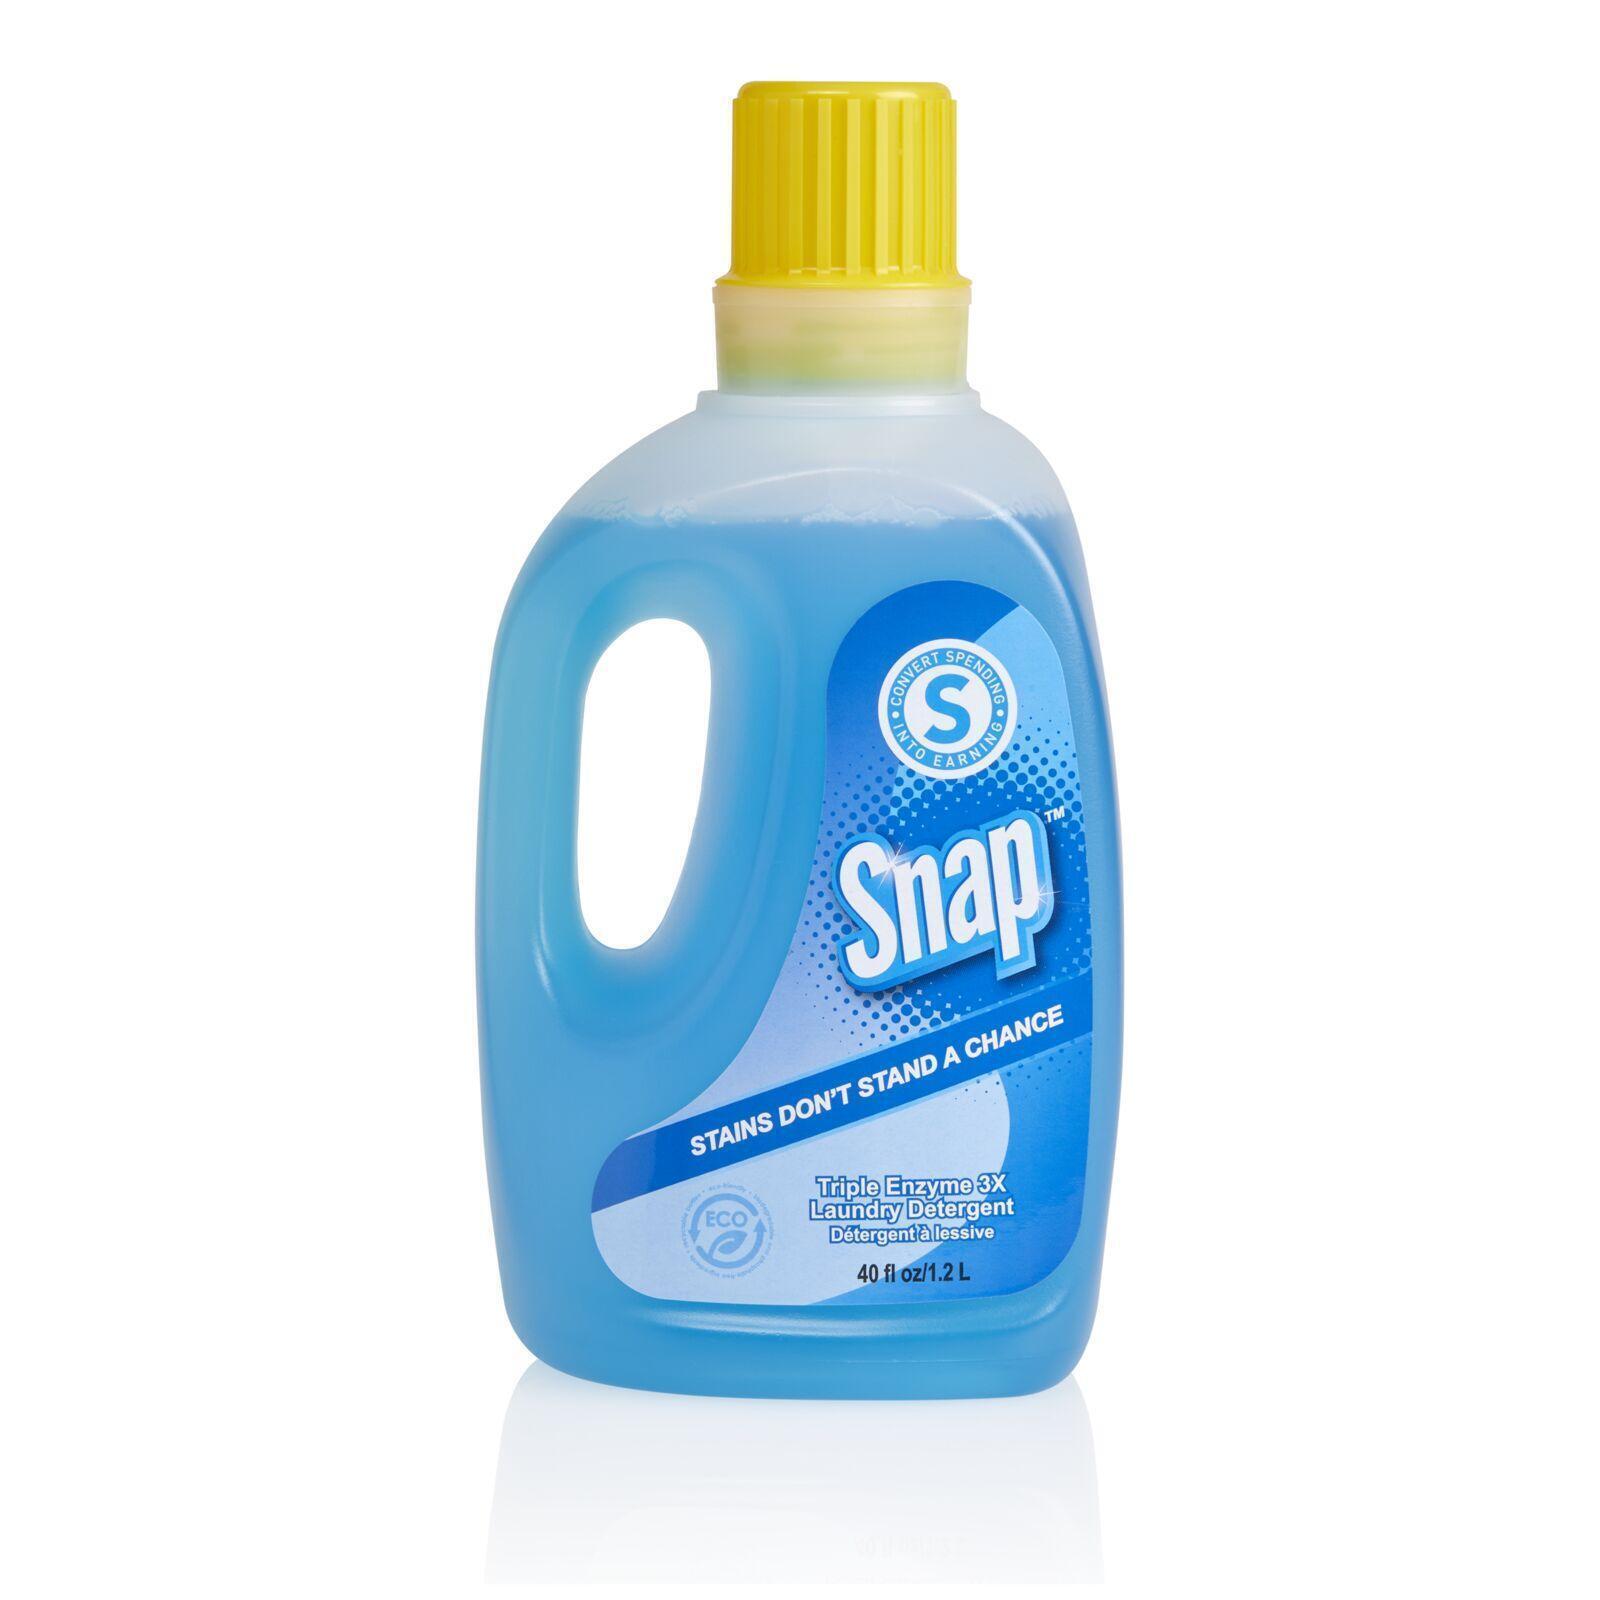 Snap Triple Enzyme 3X Laundry Detergent